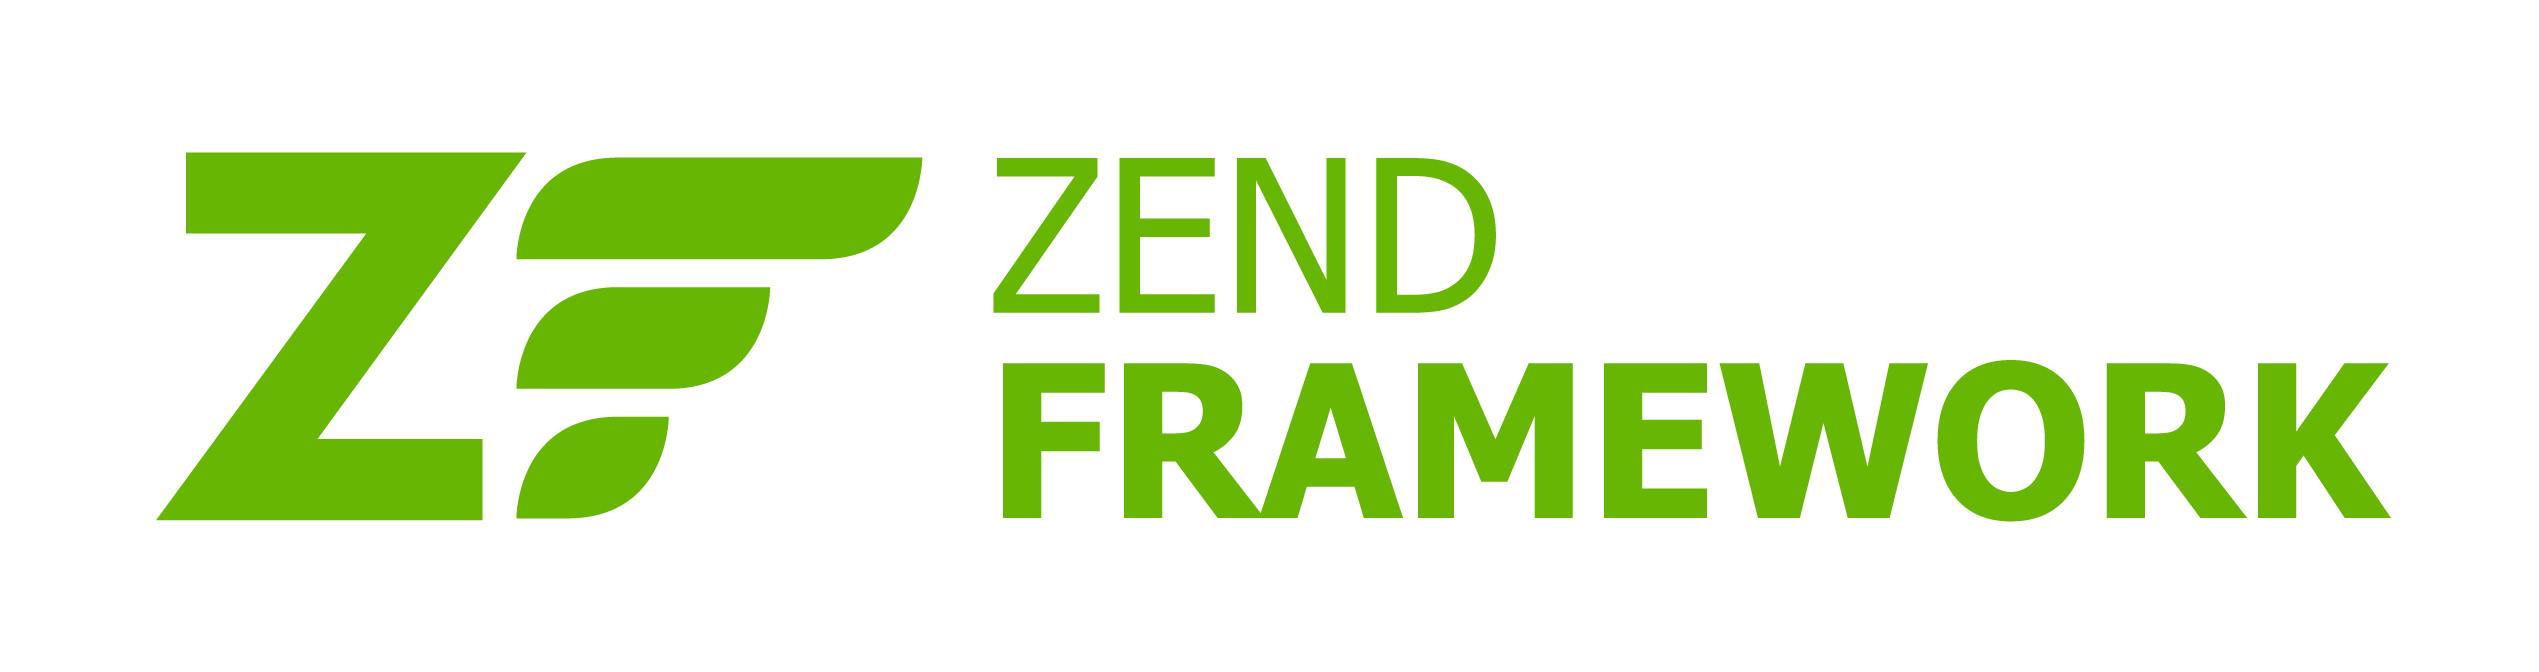 GitHub - zendframework/zendframework: Official Zend Framework repository